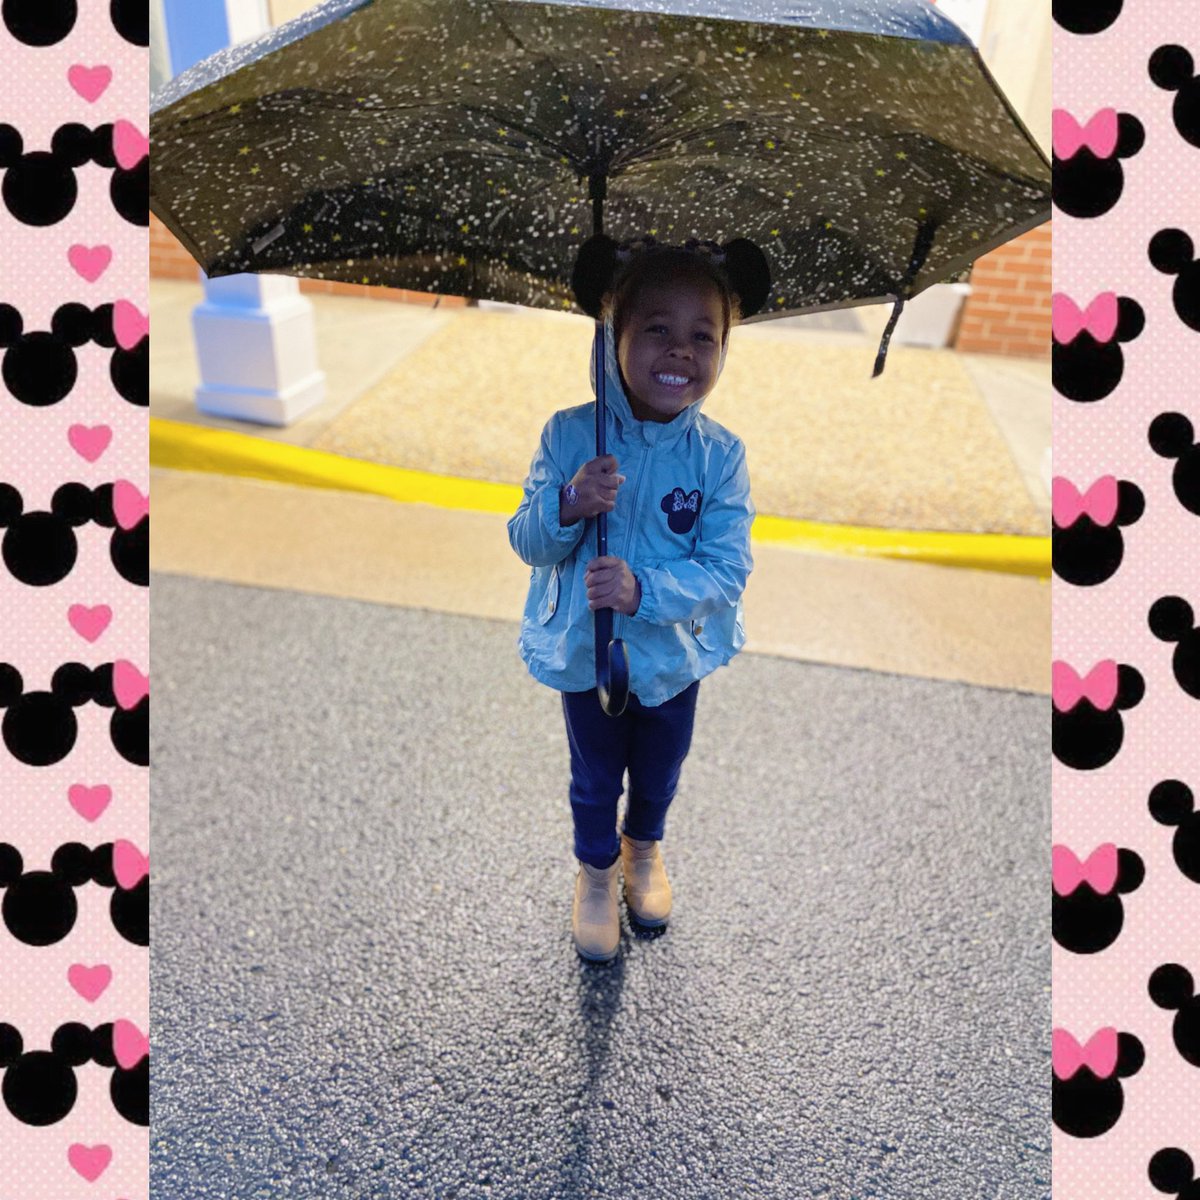 When it rains, it pours blessings! 💕 #WhitleyJanelle #myfavoritegirl